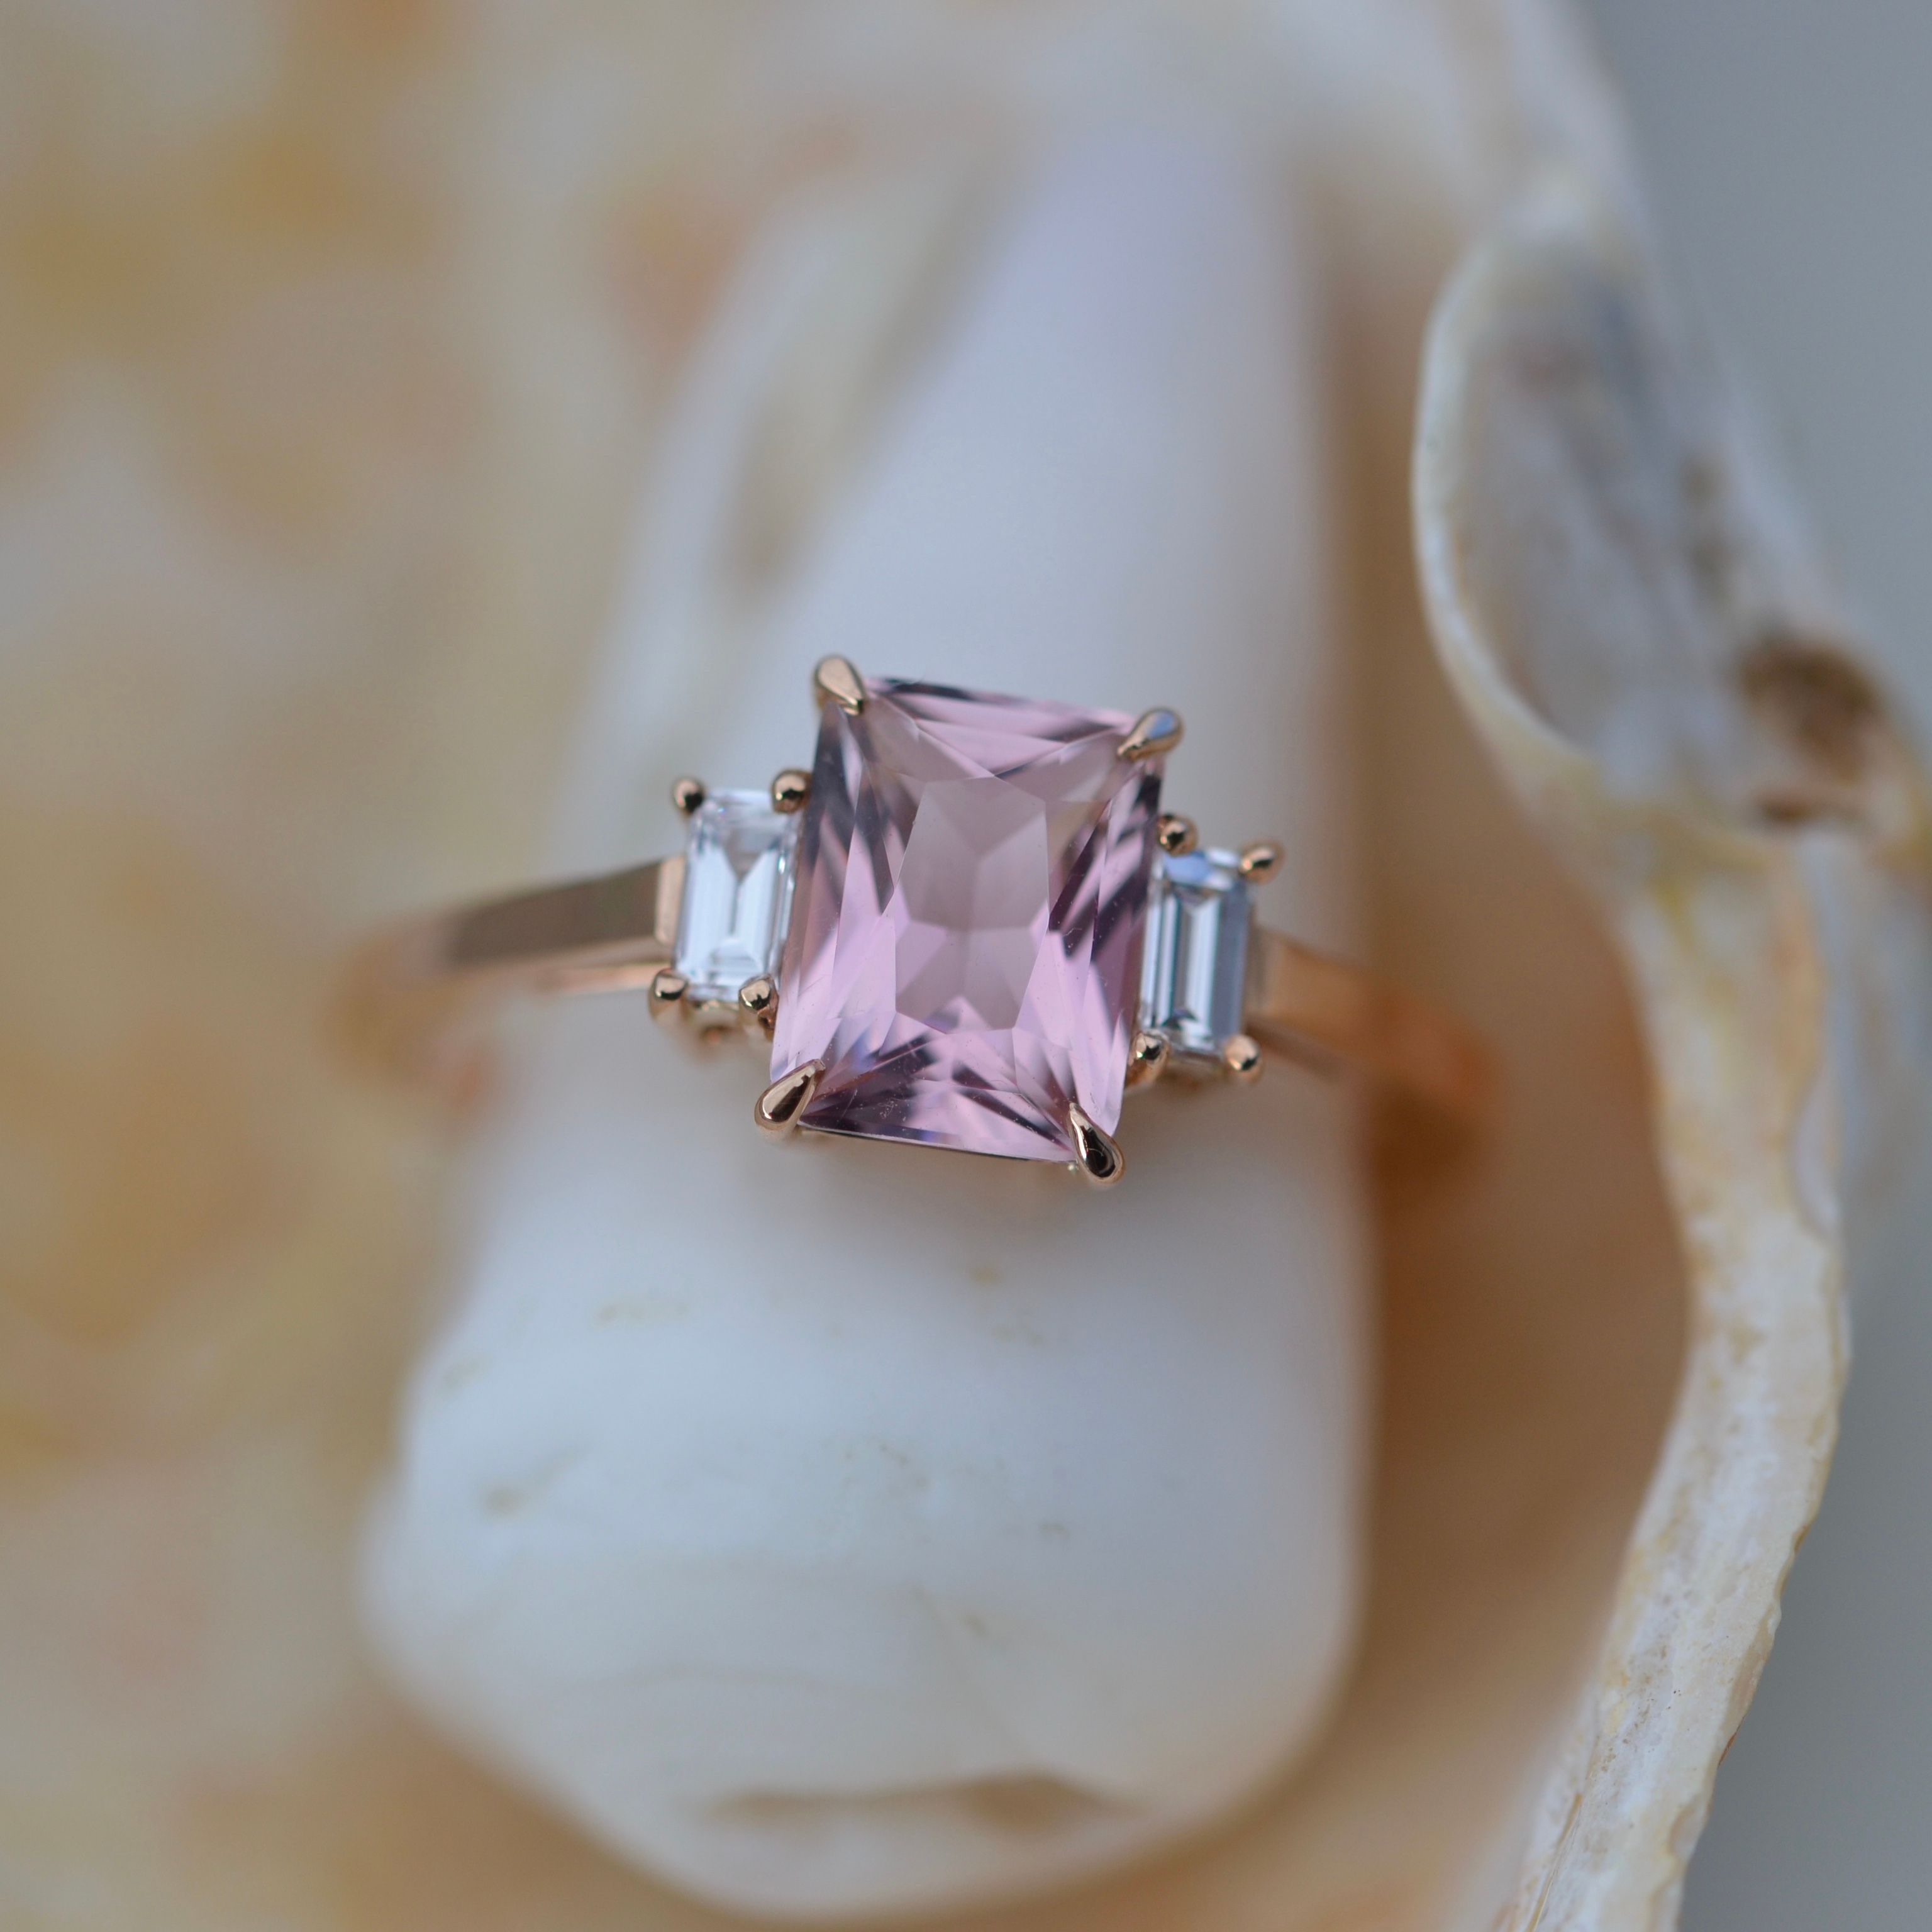 Vintage Pink Tourmaline and Diamond Ring